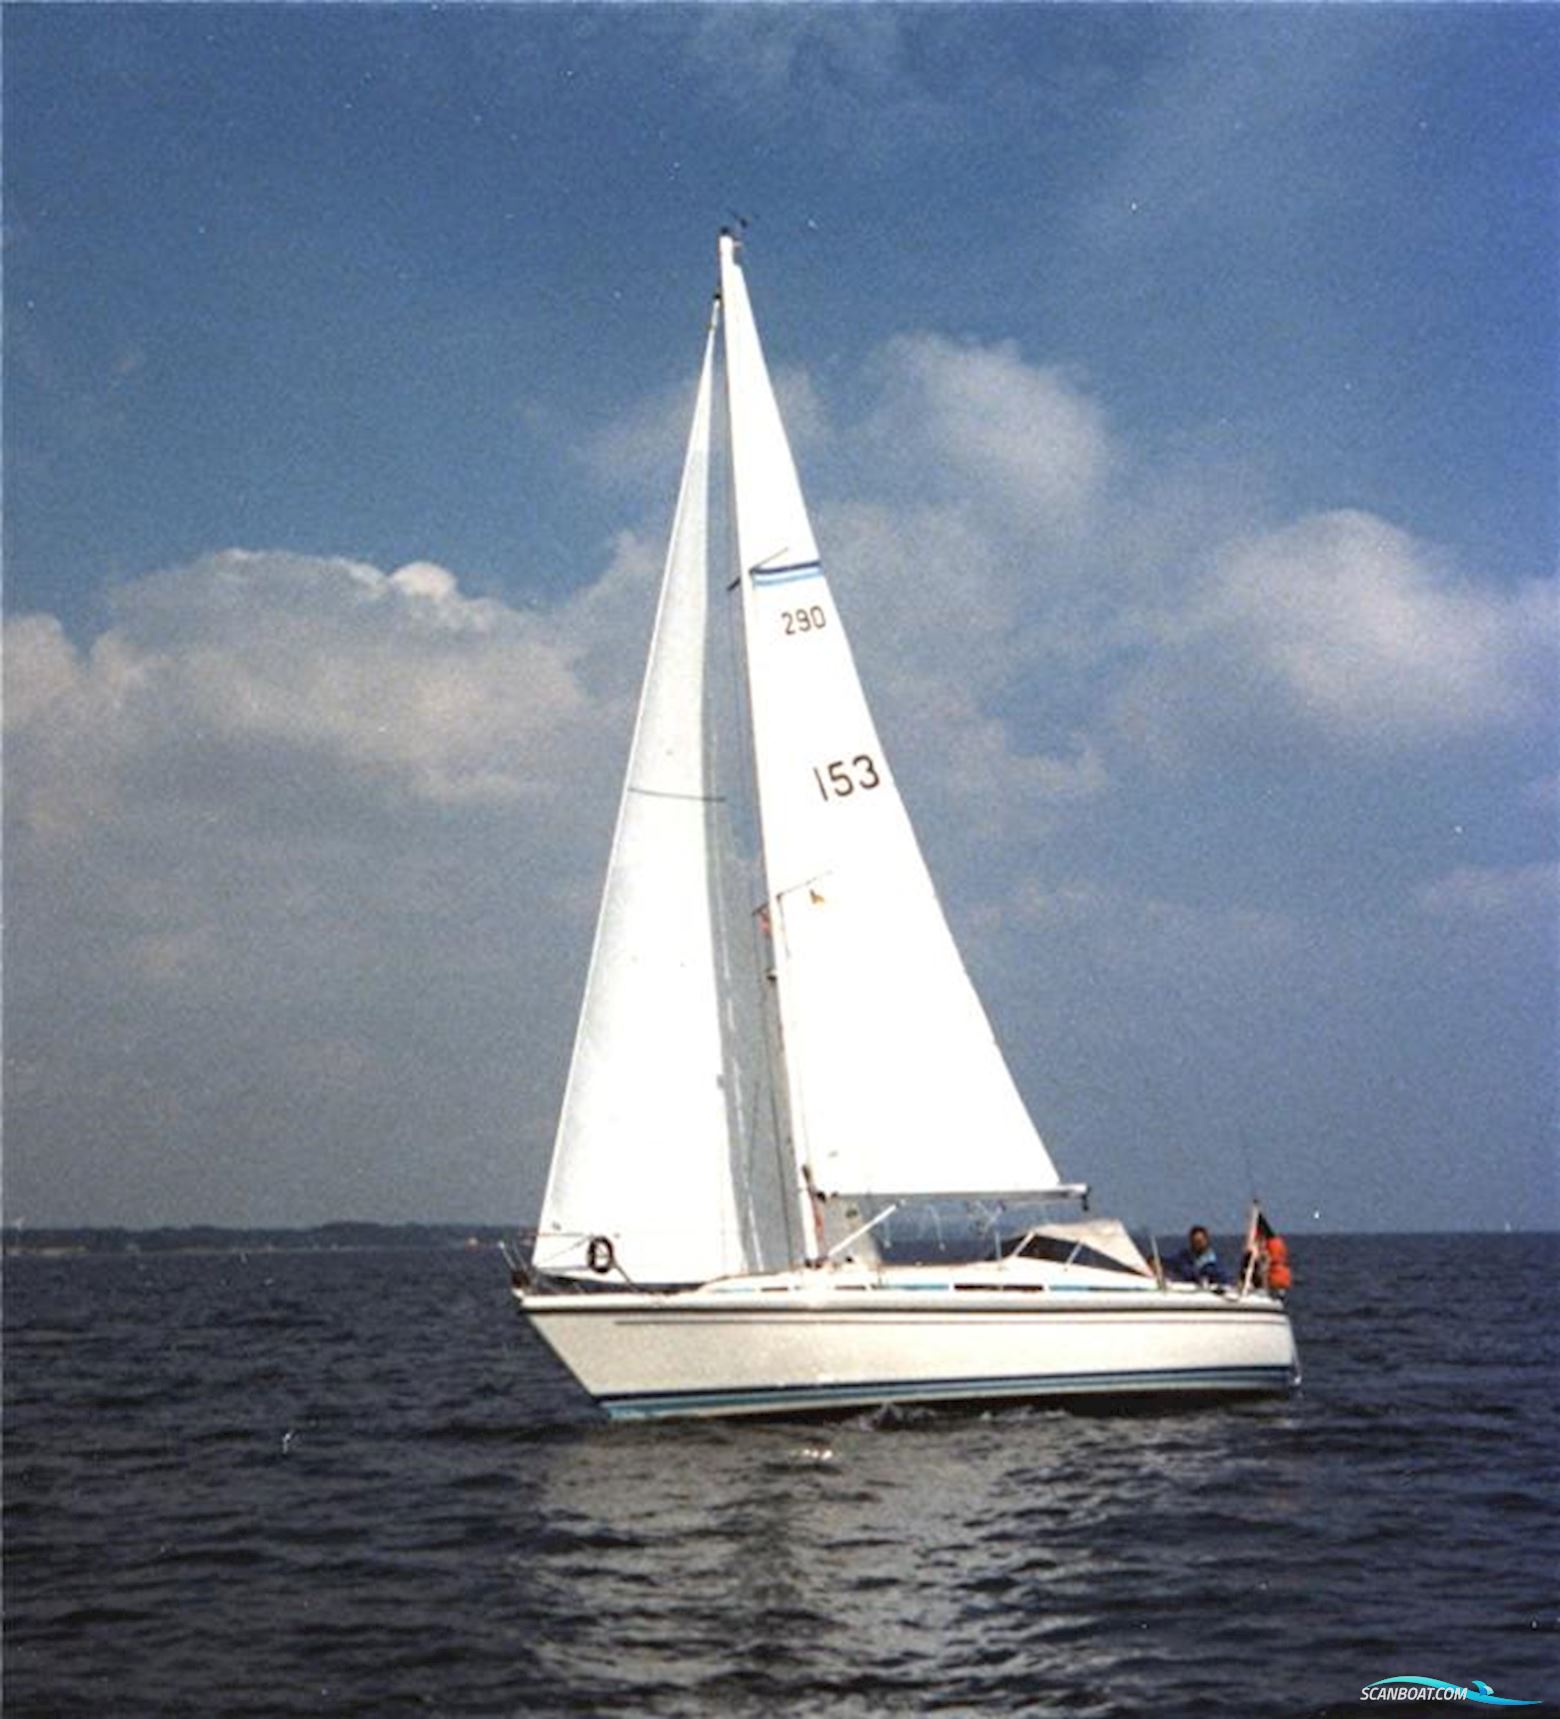 LM Mermaid 290 Sailing boat 1987, with Volvo Penta 2020 engine, Germany